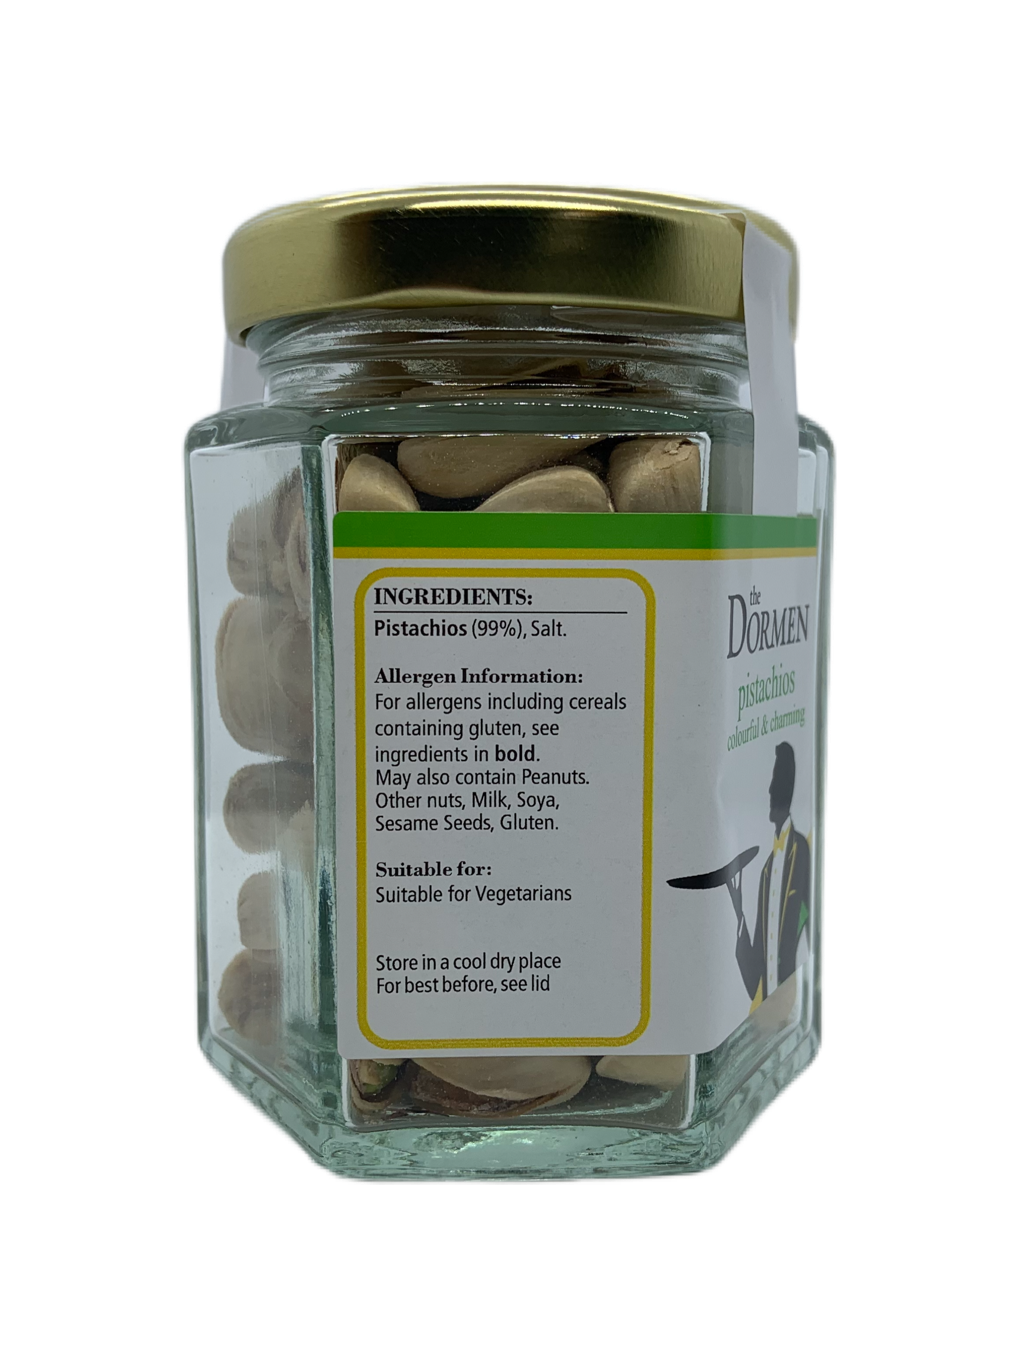 Salted Pistachios Hexagonal Jar - The Dormen Food Company